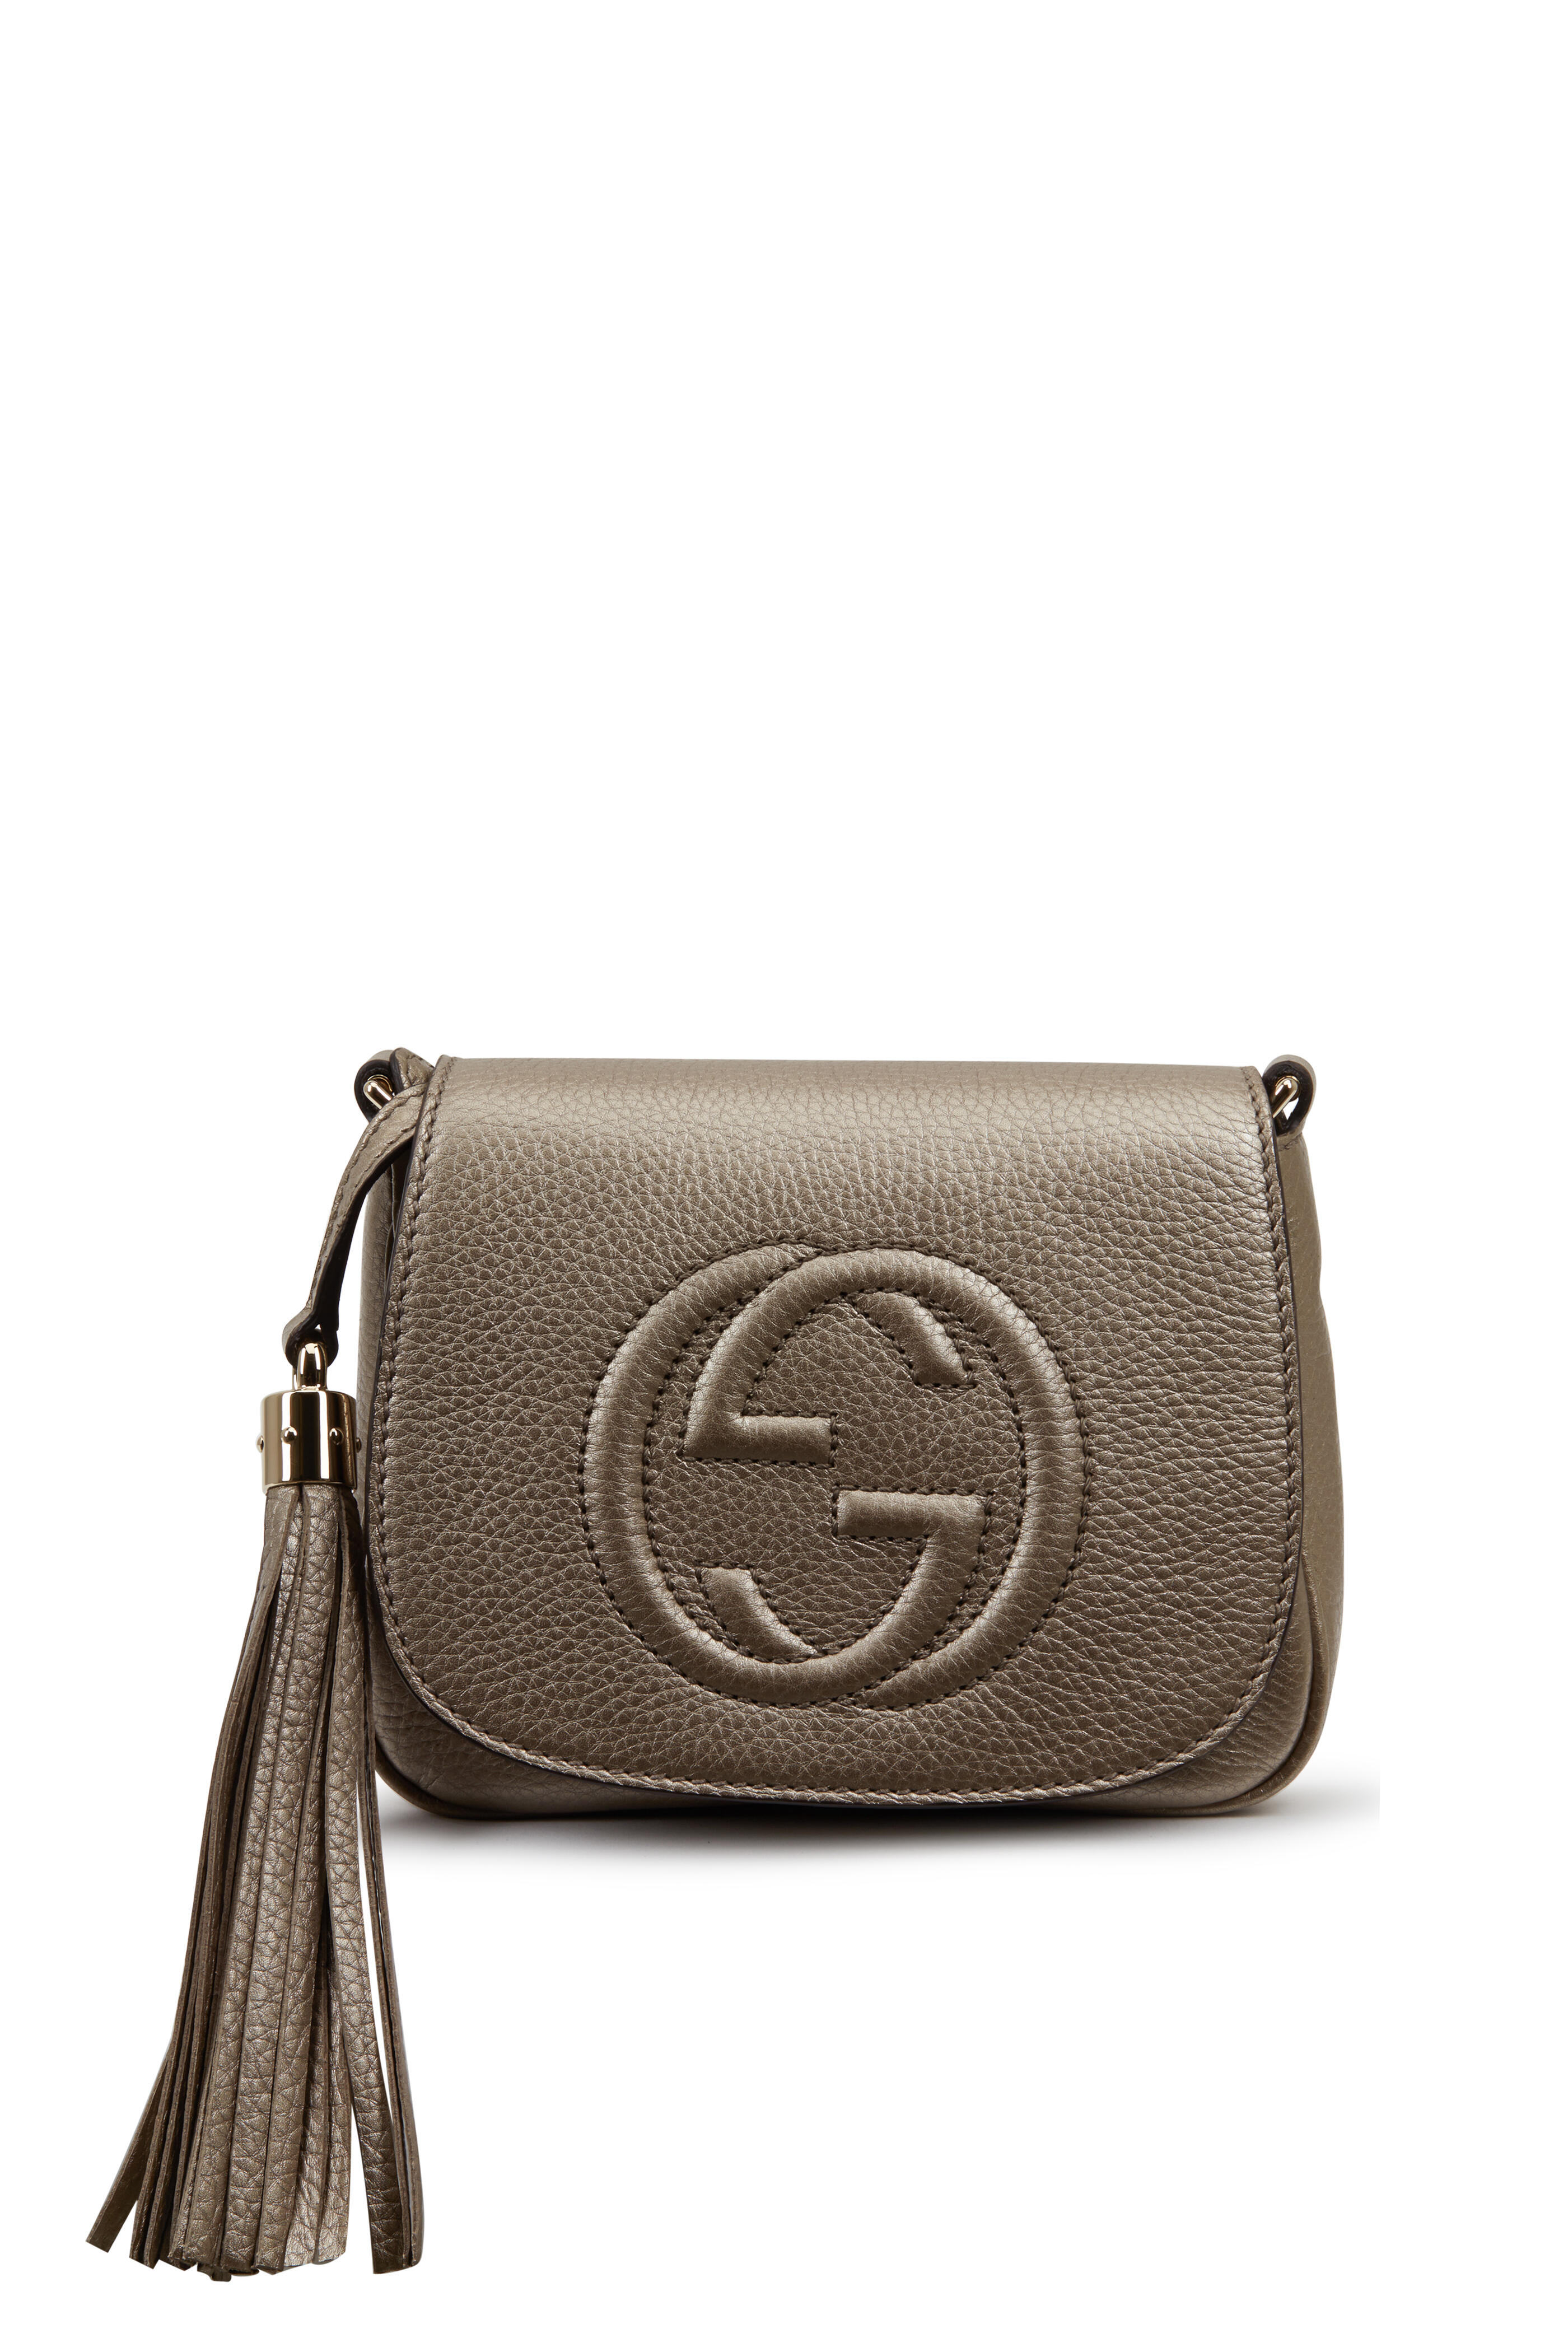 Gucci Soho Gold Pebbled Leather Chain Shoulder Bag